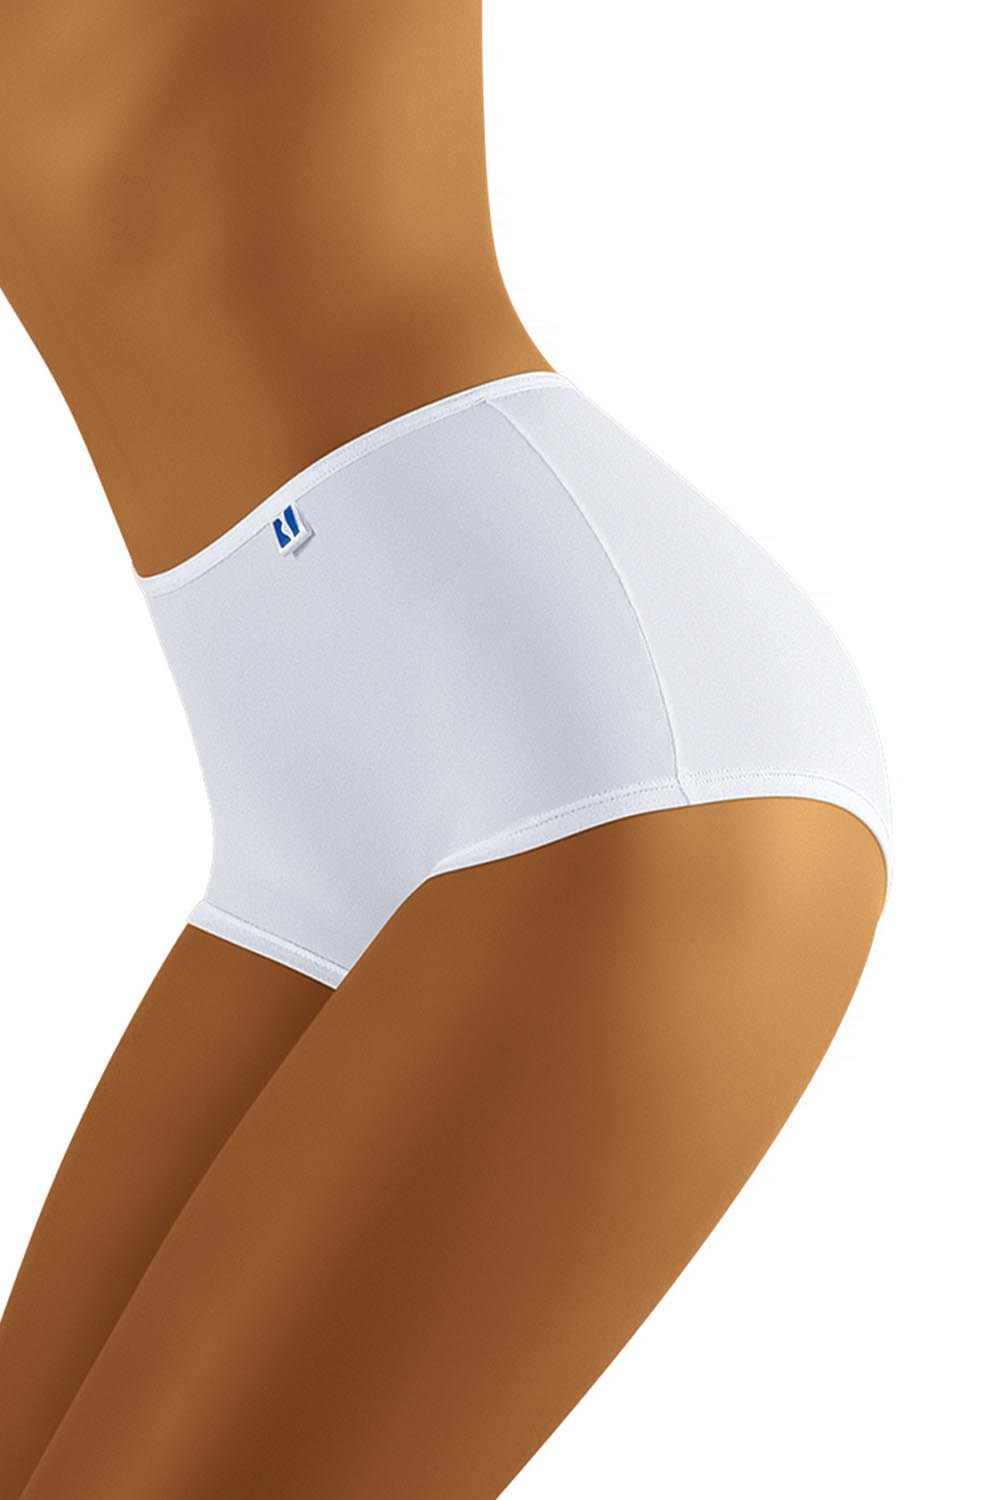 Wol-Bar Tahoo Shorts kolor:biały S